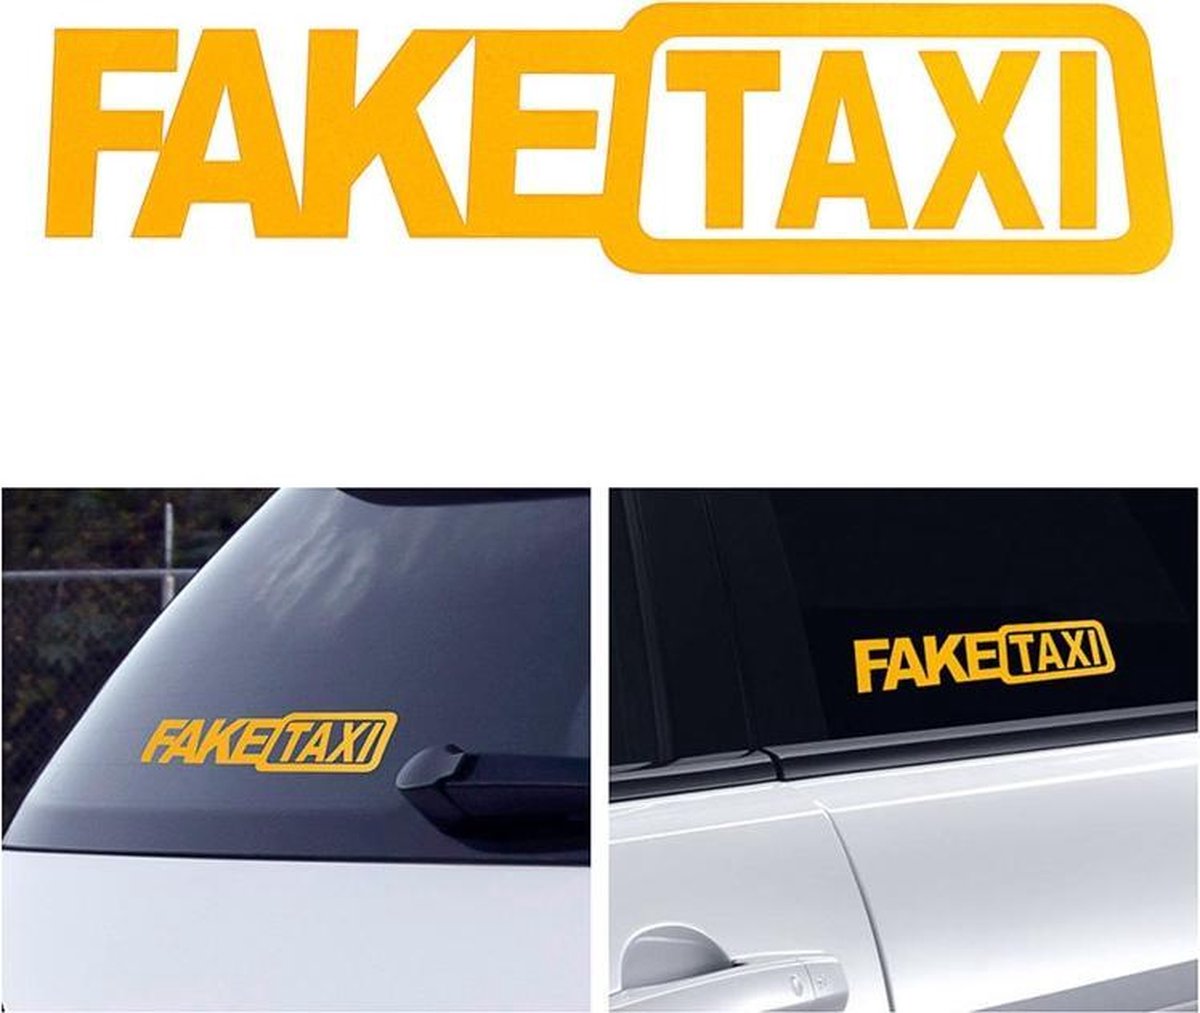 Taxsi fake 